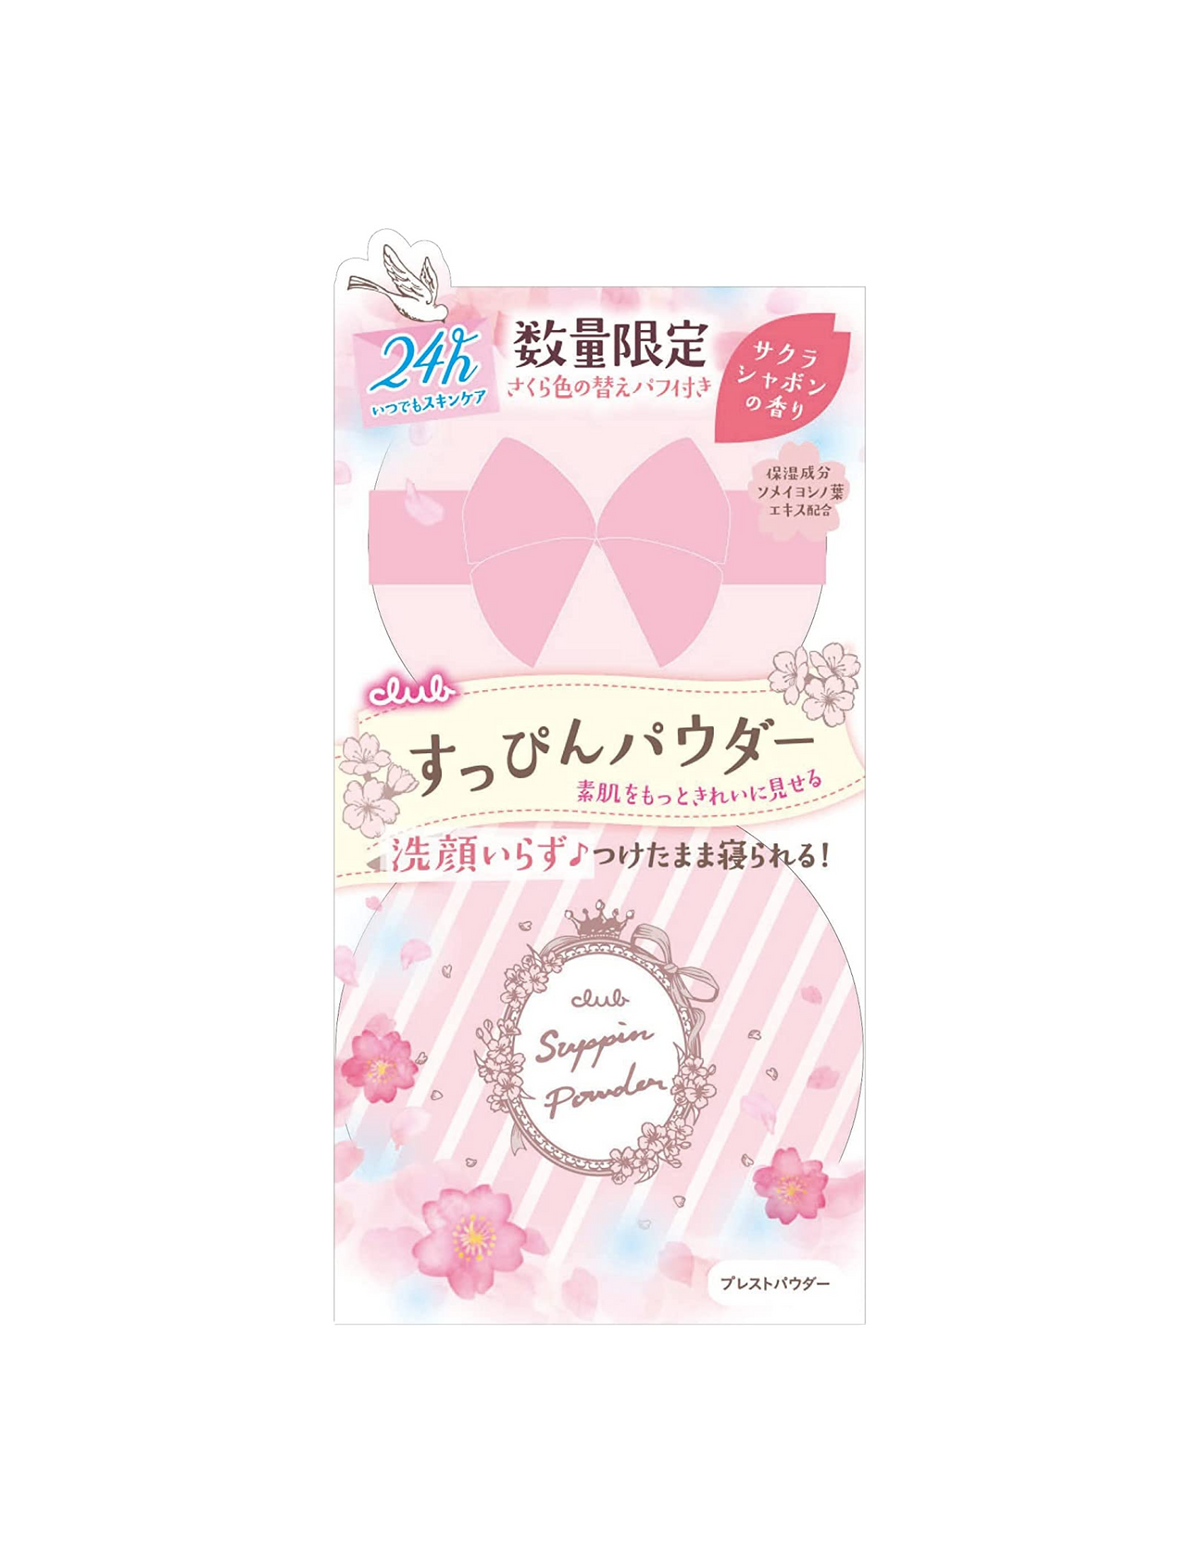 Club Suppin Powder | Sakura Sabon